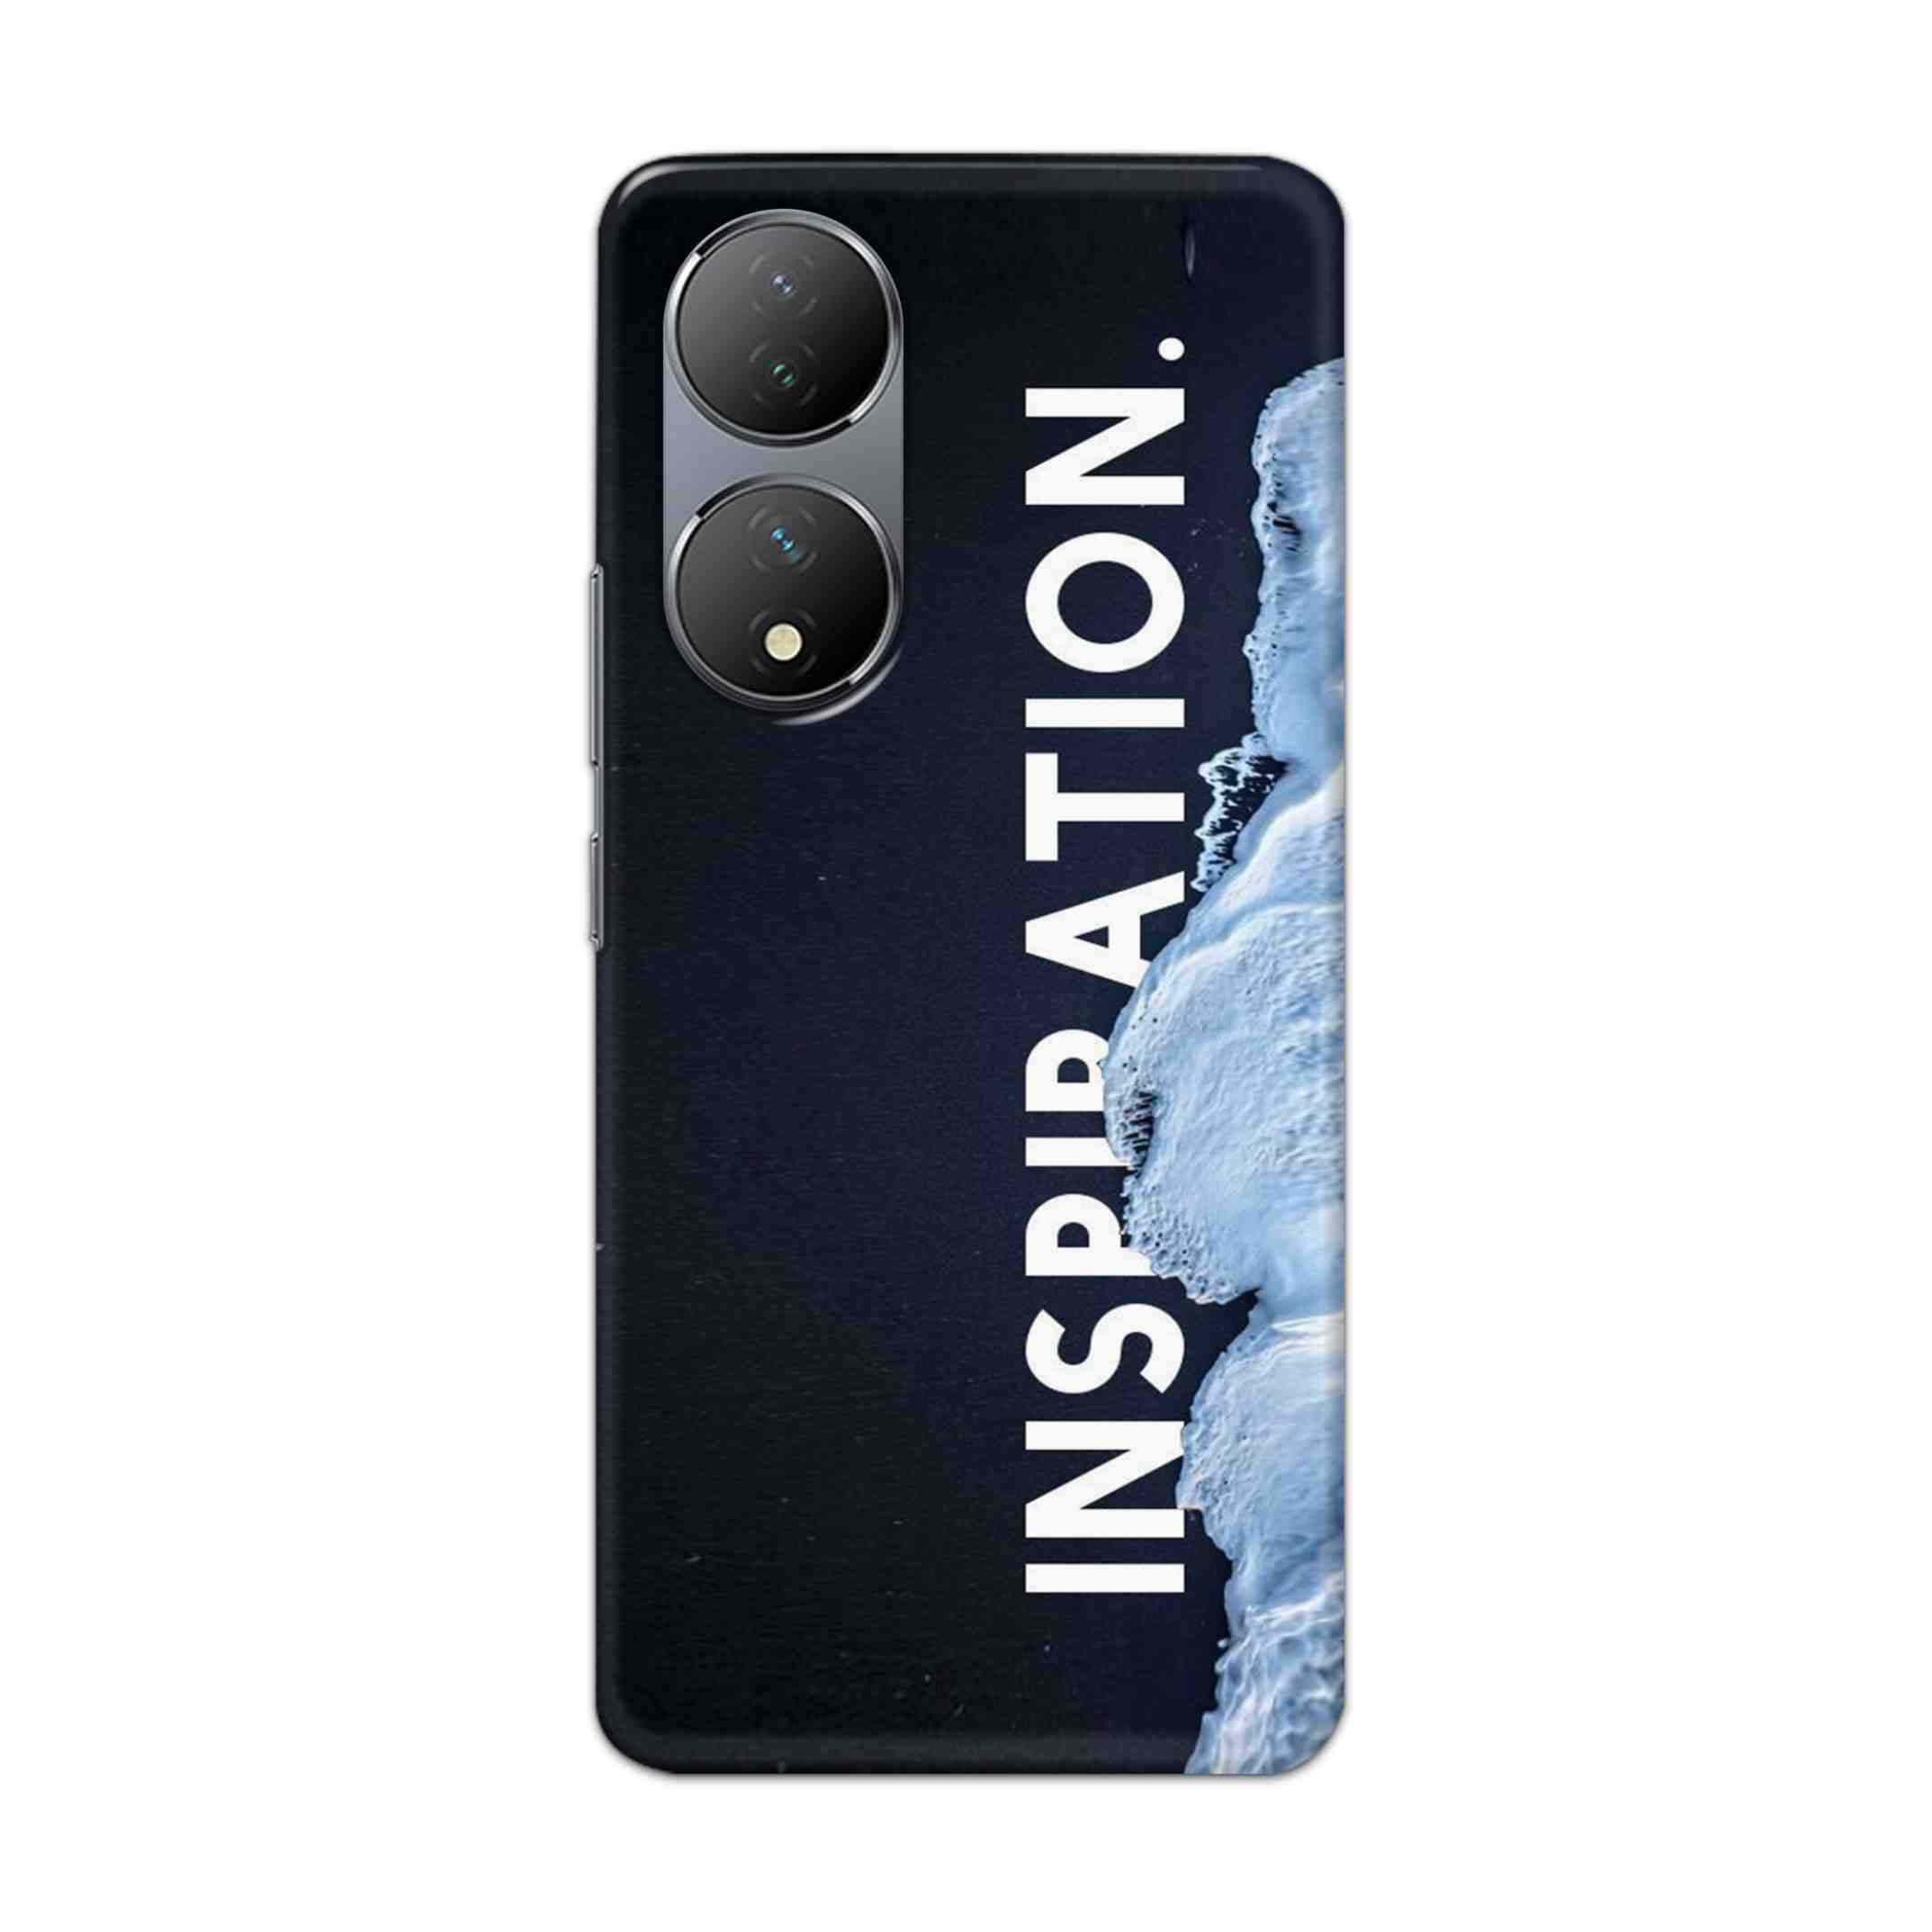 Buy Inspiration Hard Back Mobile Phone Case Cover For Vivo Y100 Online